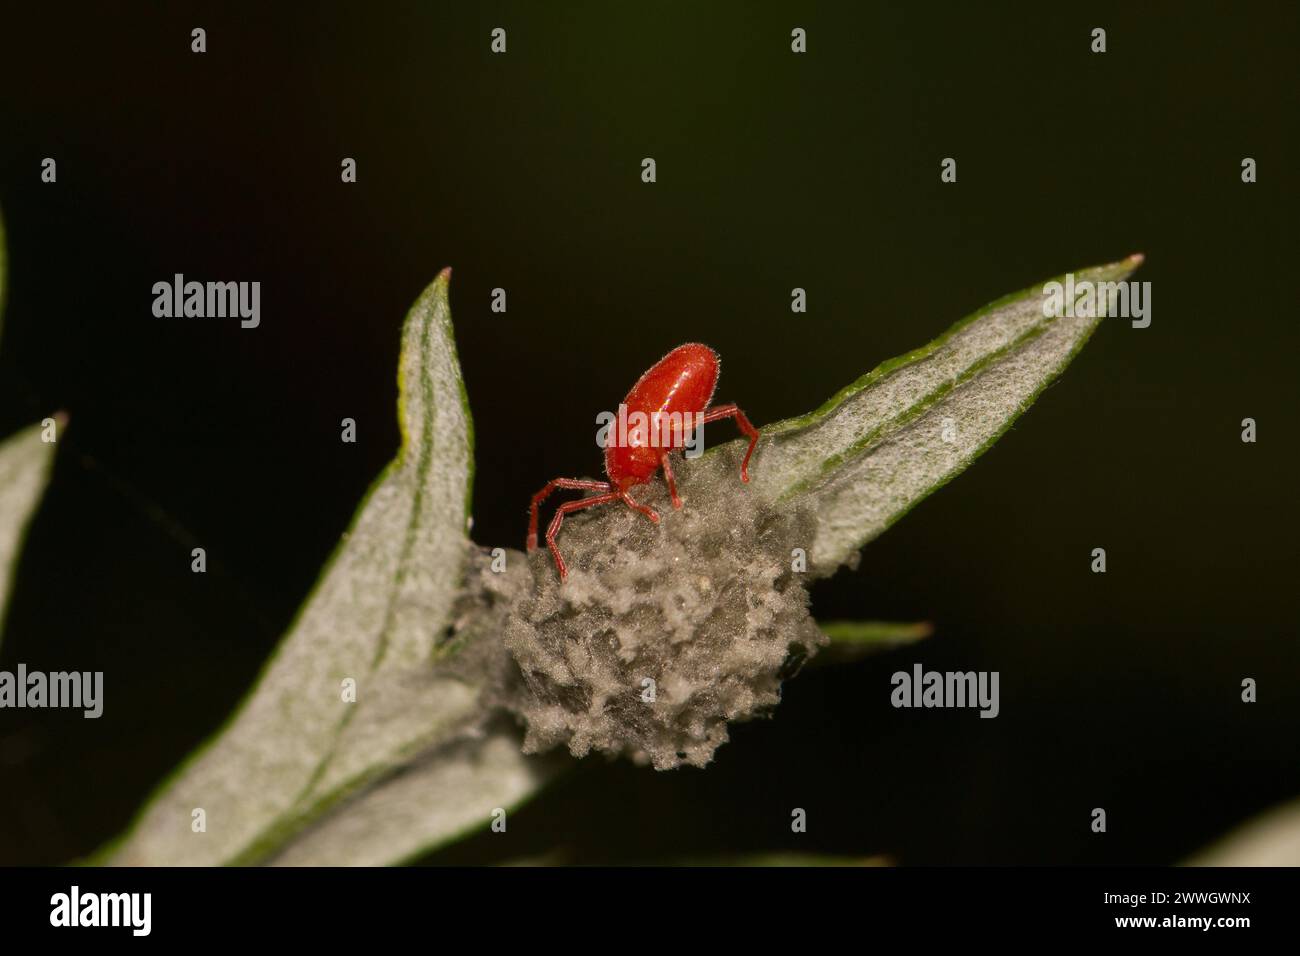 Red mite (Balaustium) investigating a spider egg sac Stock Photo